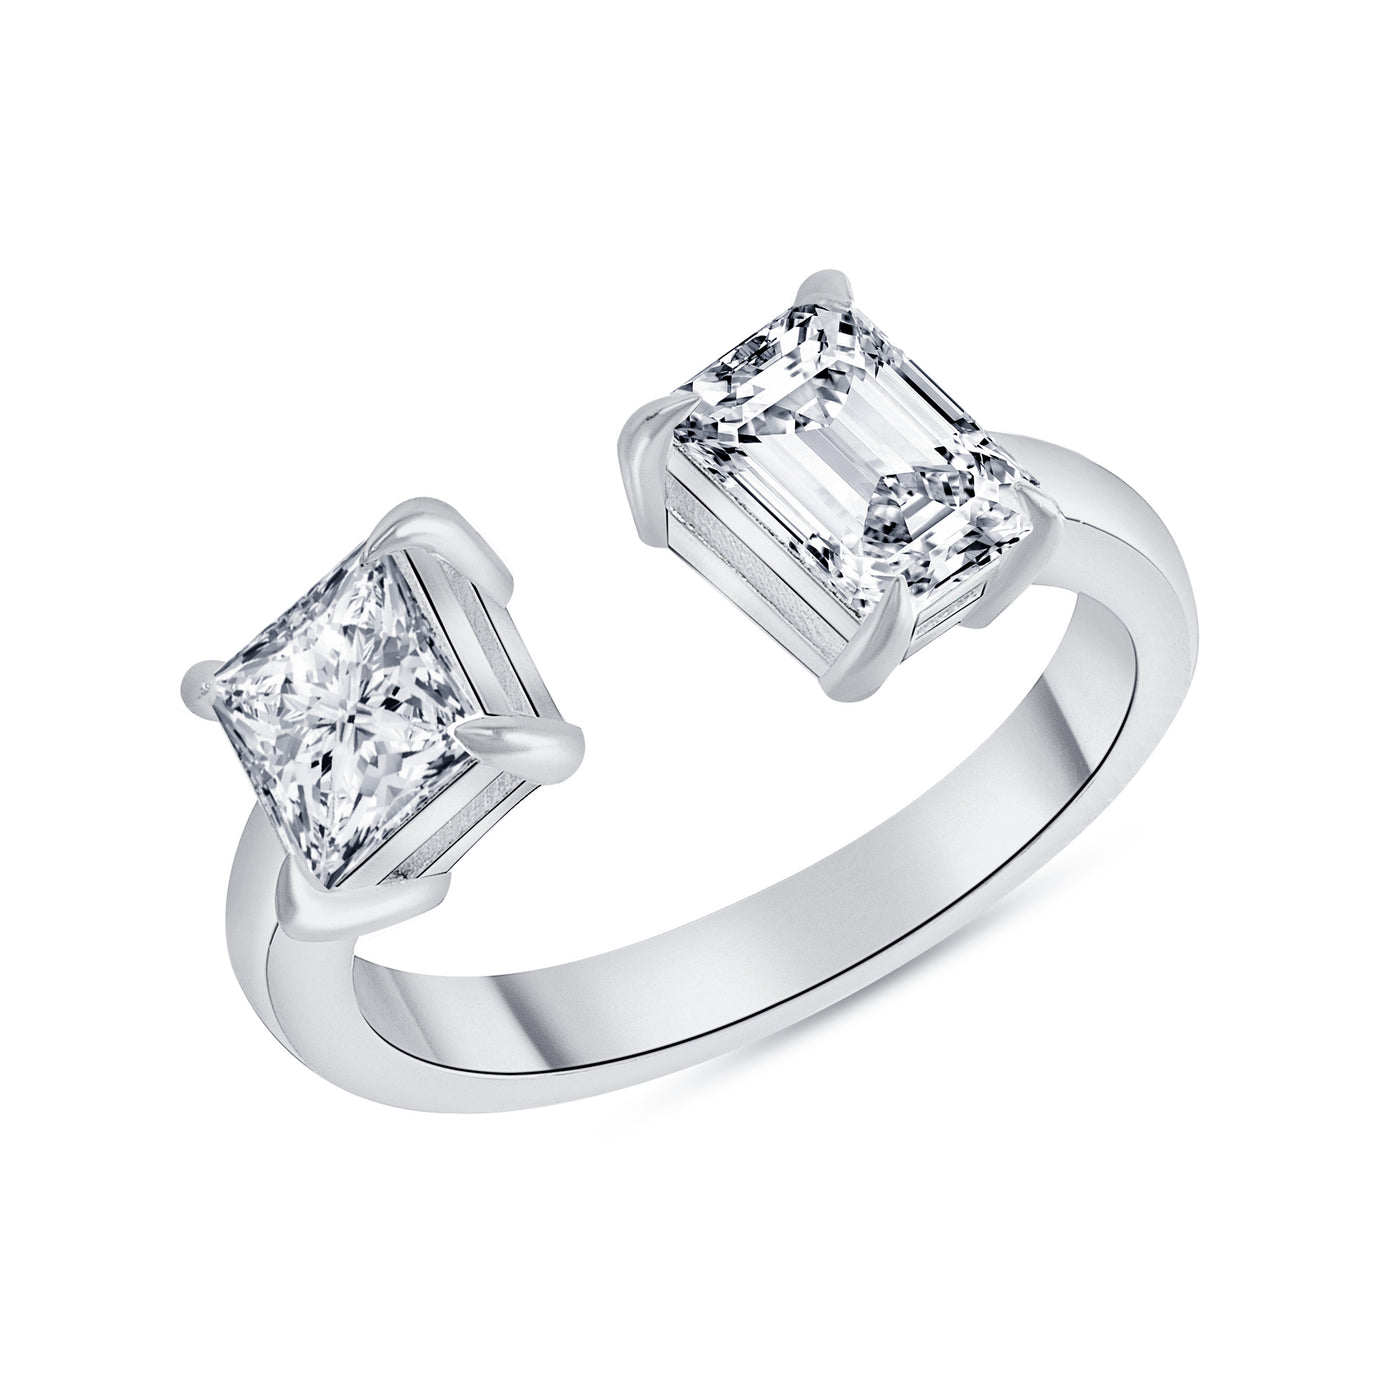 Two Stone Emerald and Princess Cut Diamond Engagement Ring 1.00 Carat